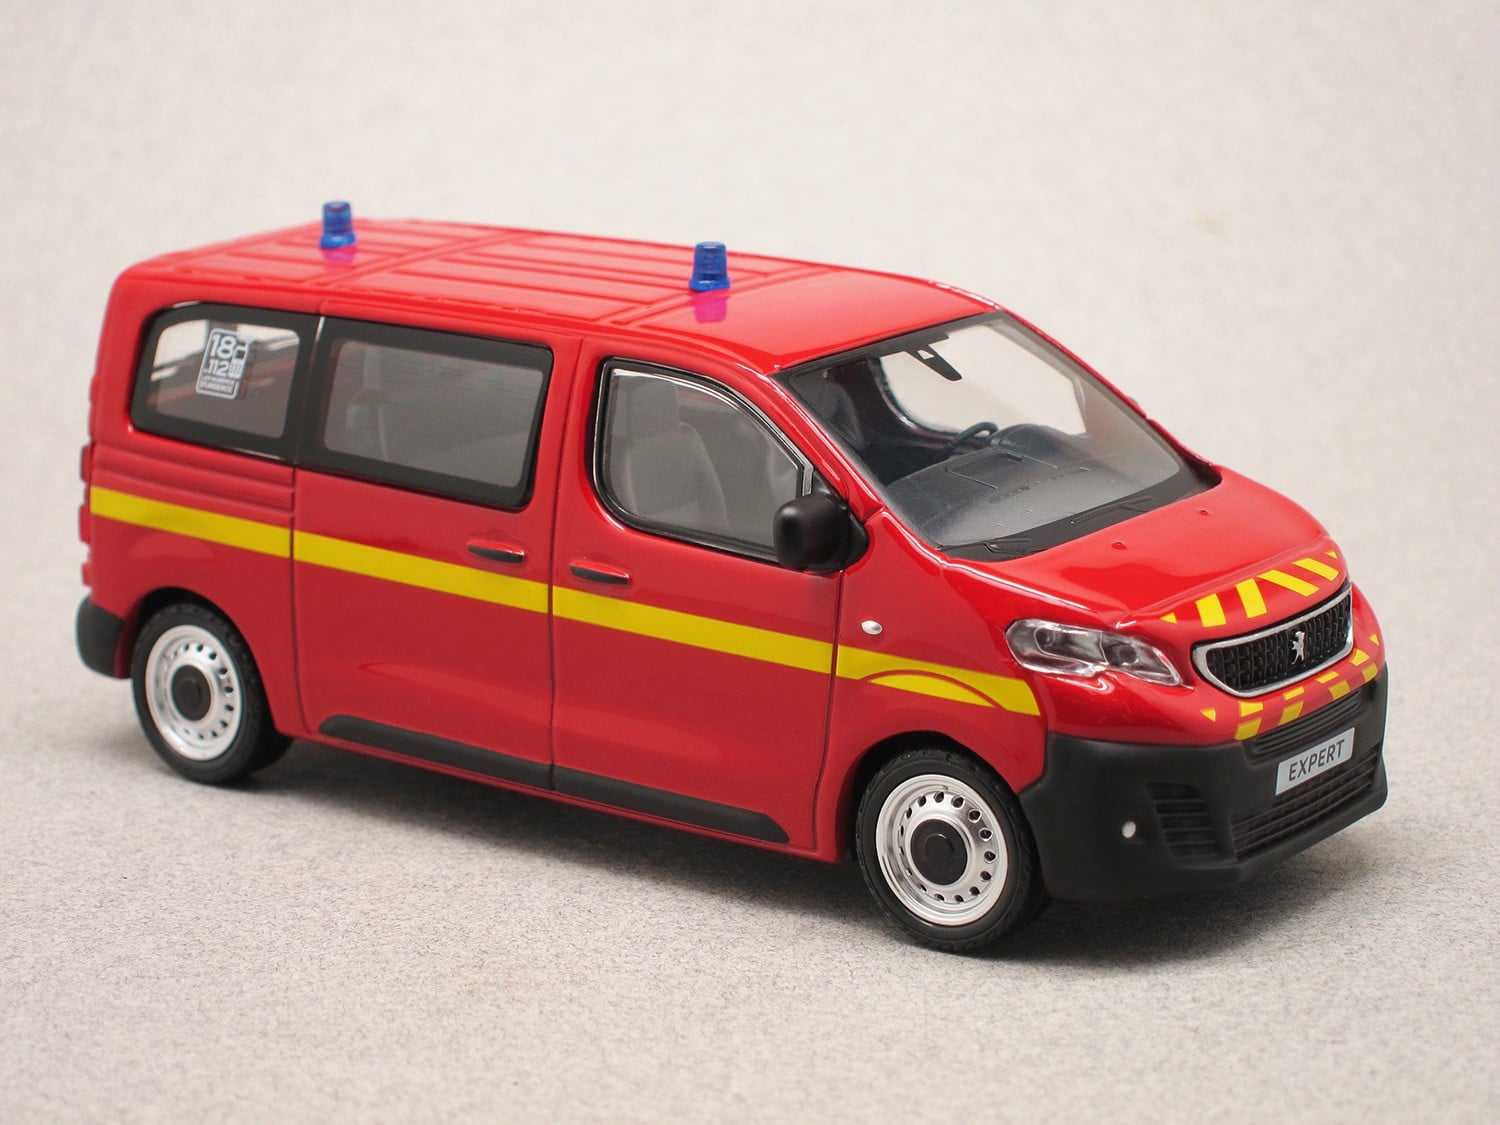 Peugeot Expert 2016 fire rescue (Norev) 1:43